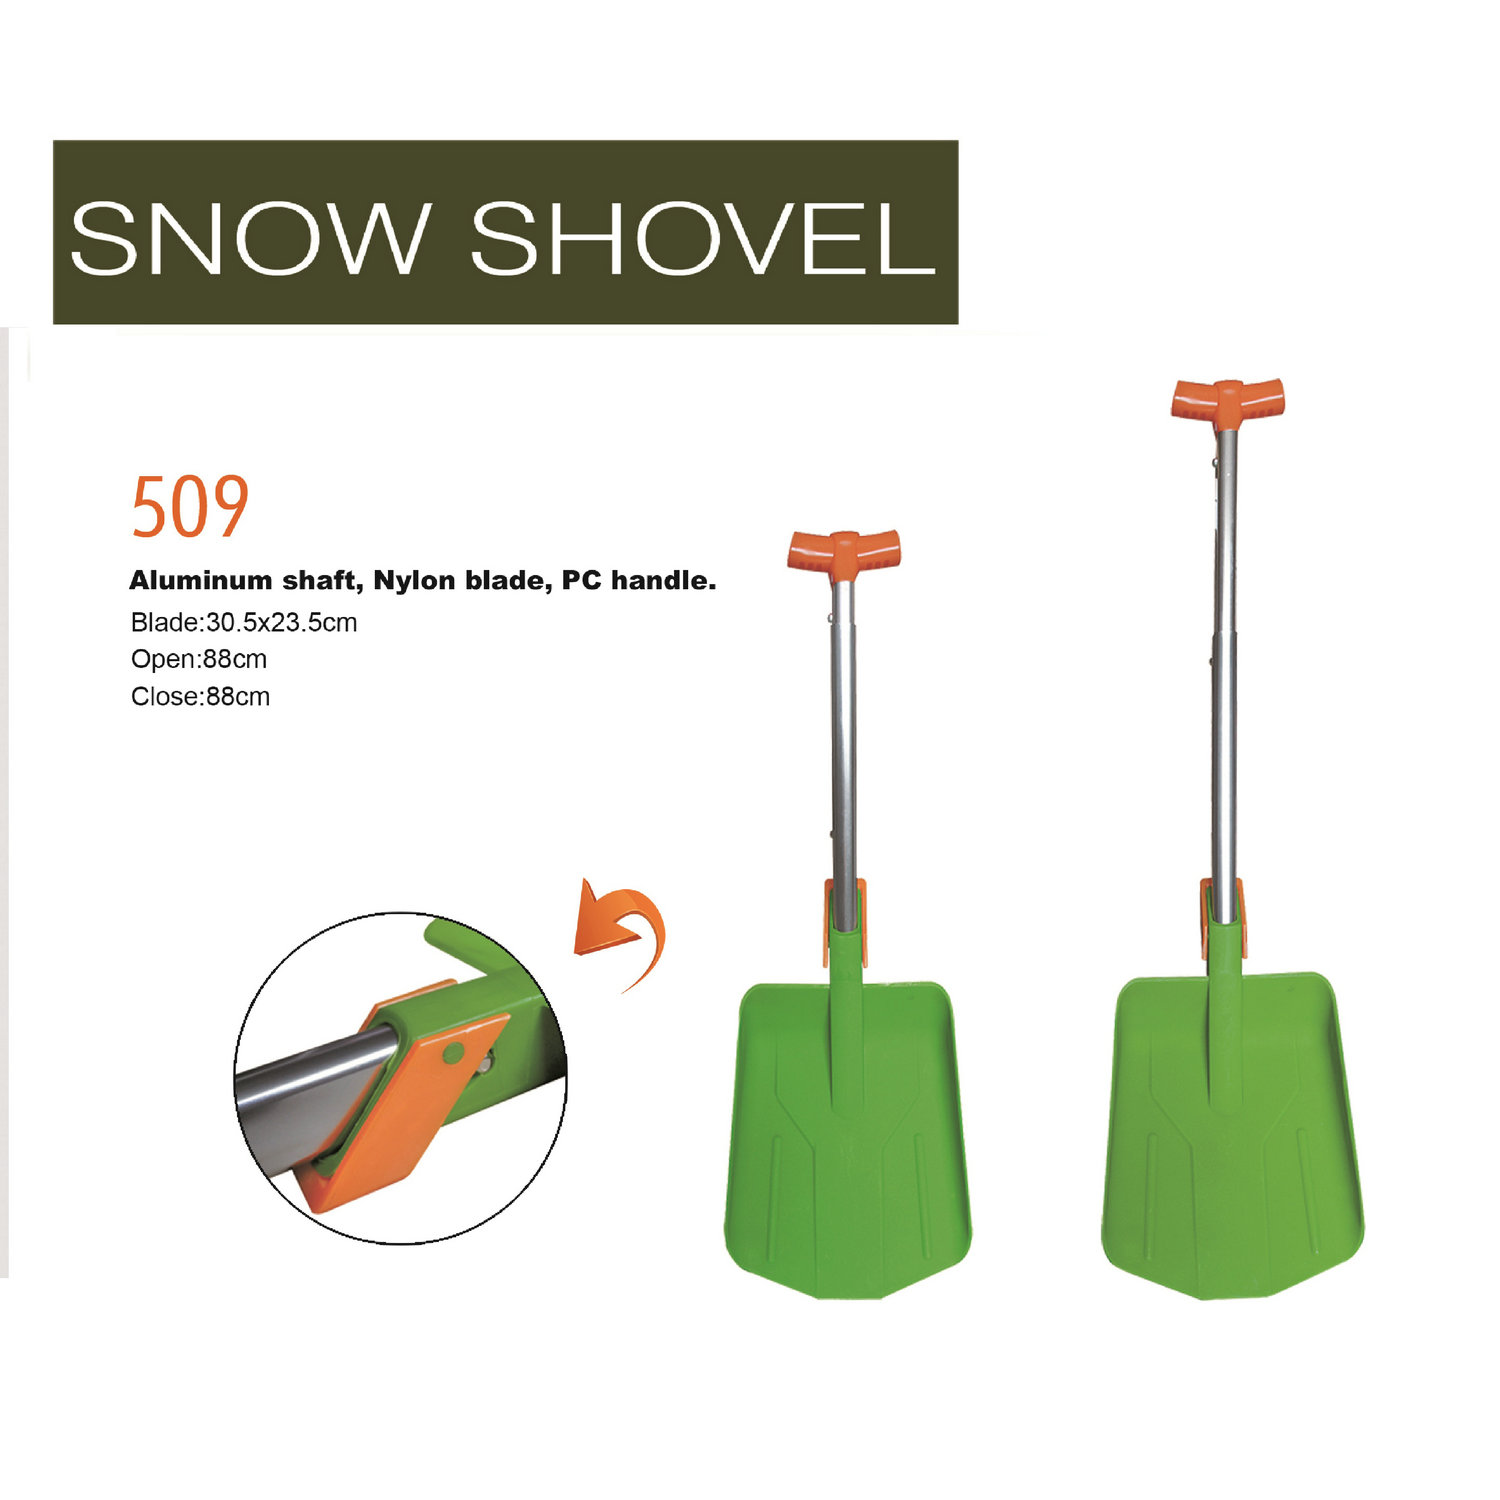 Snow shovel 509